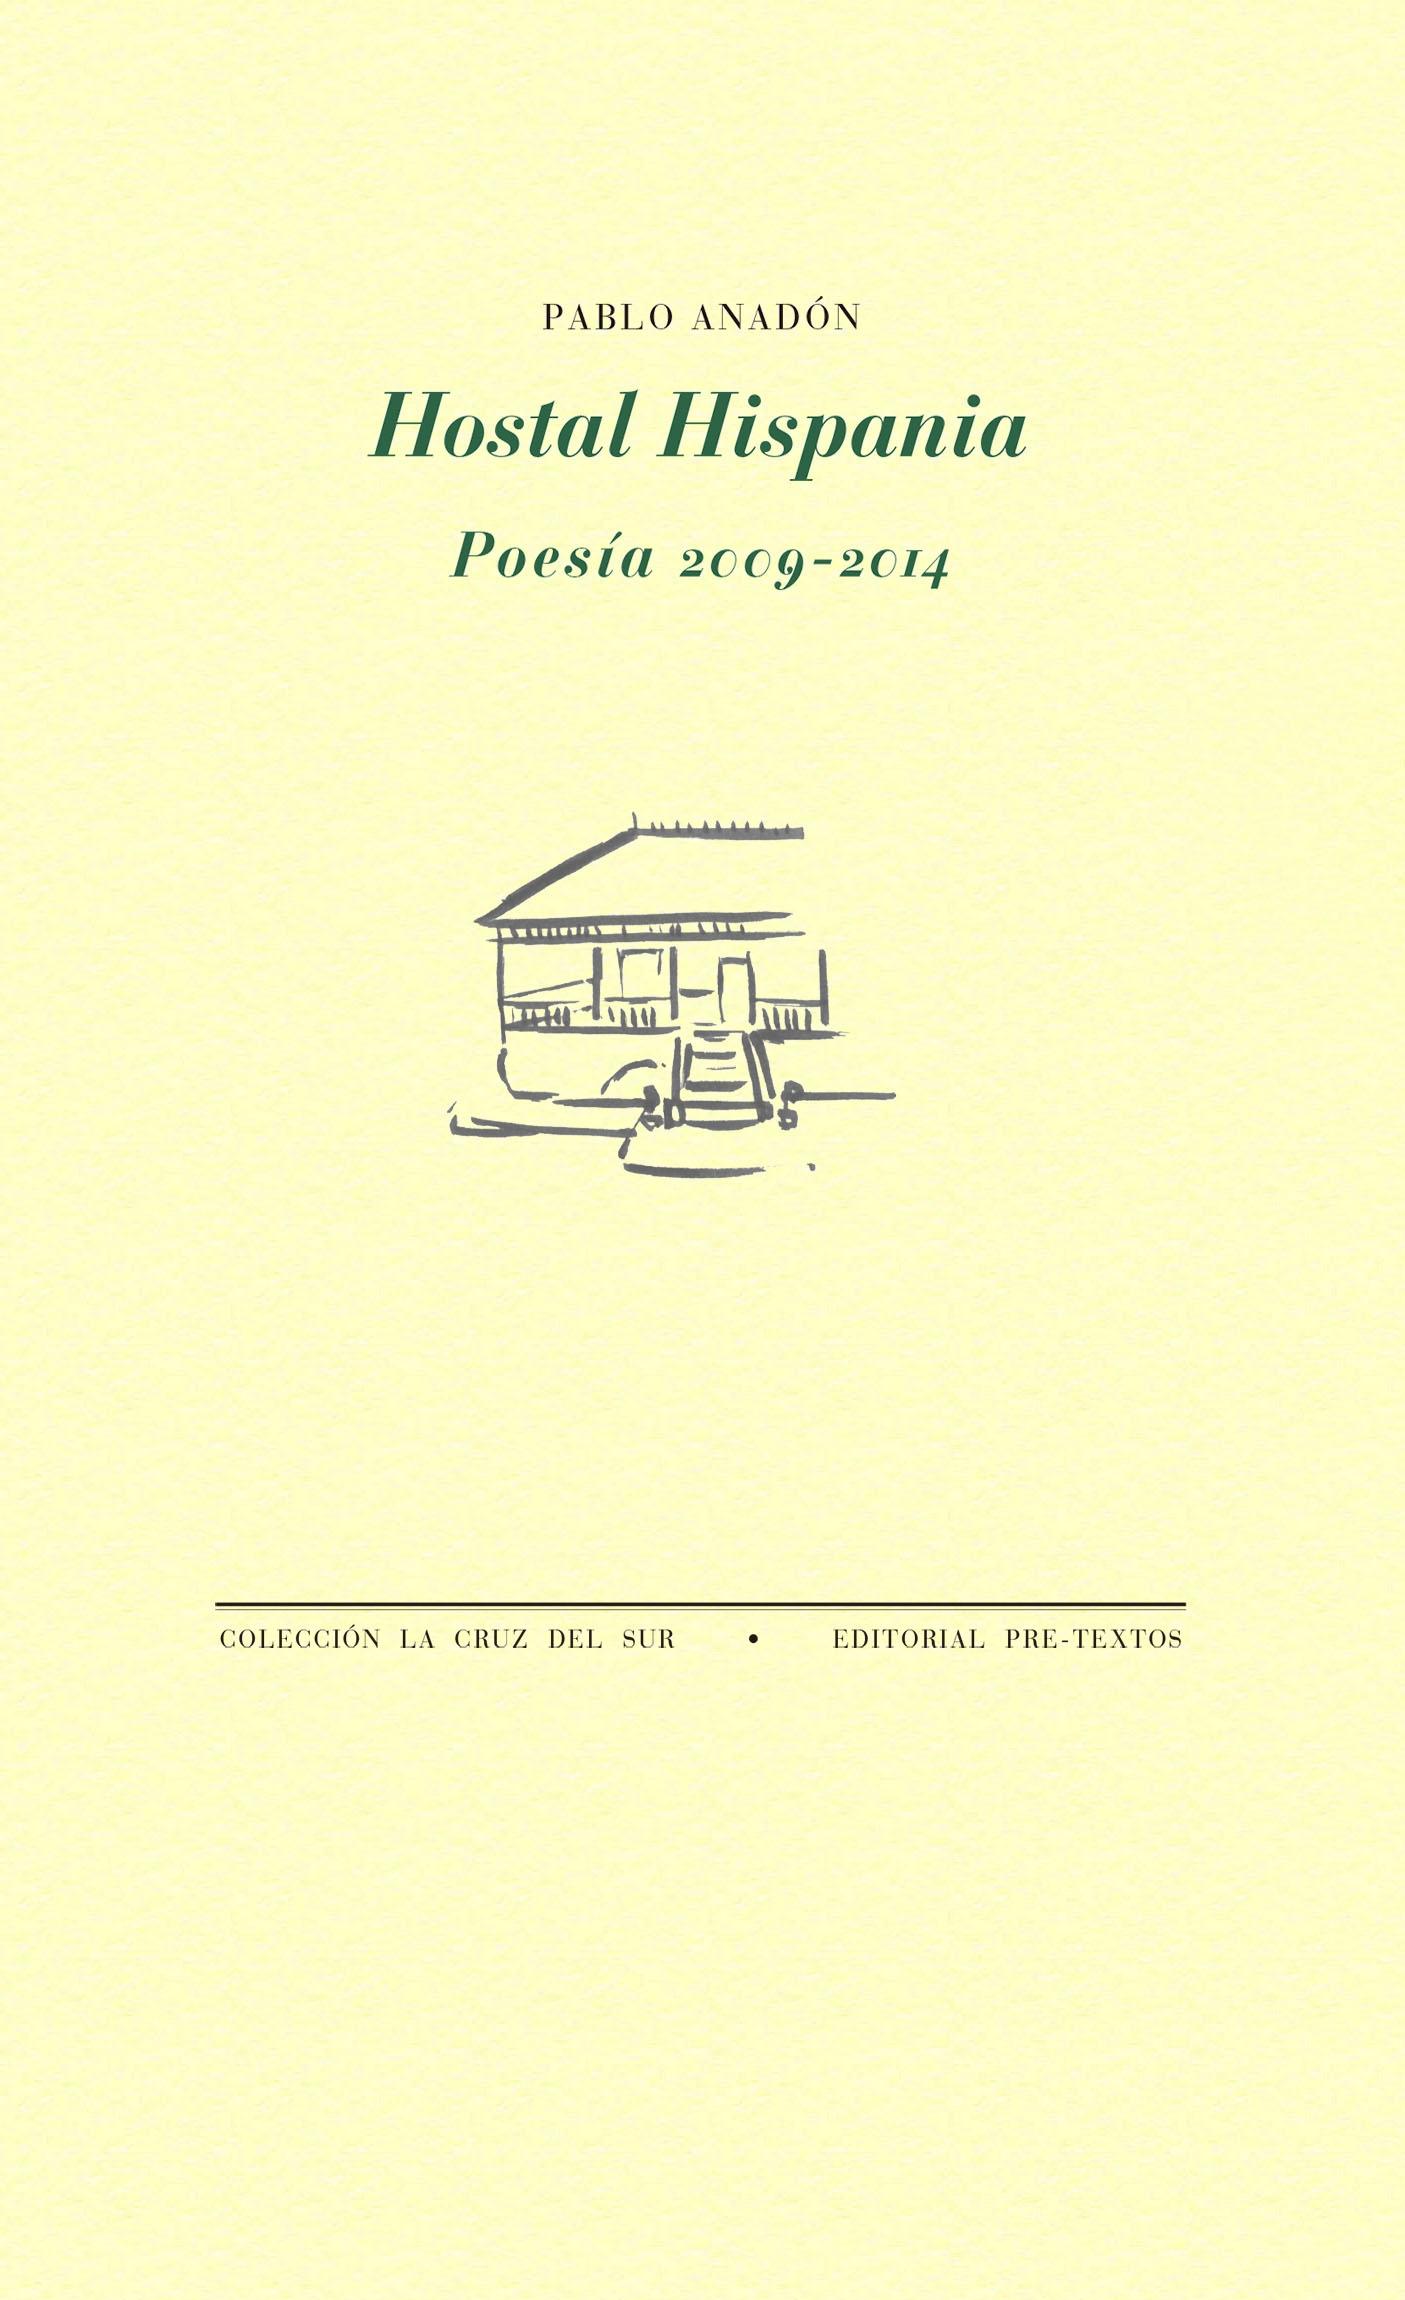 Hostal Hispania "Poesía 2009-2014"